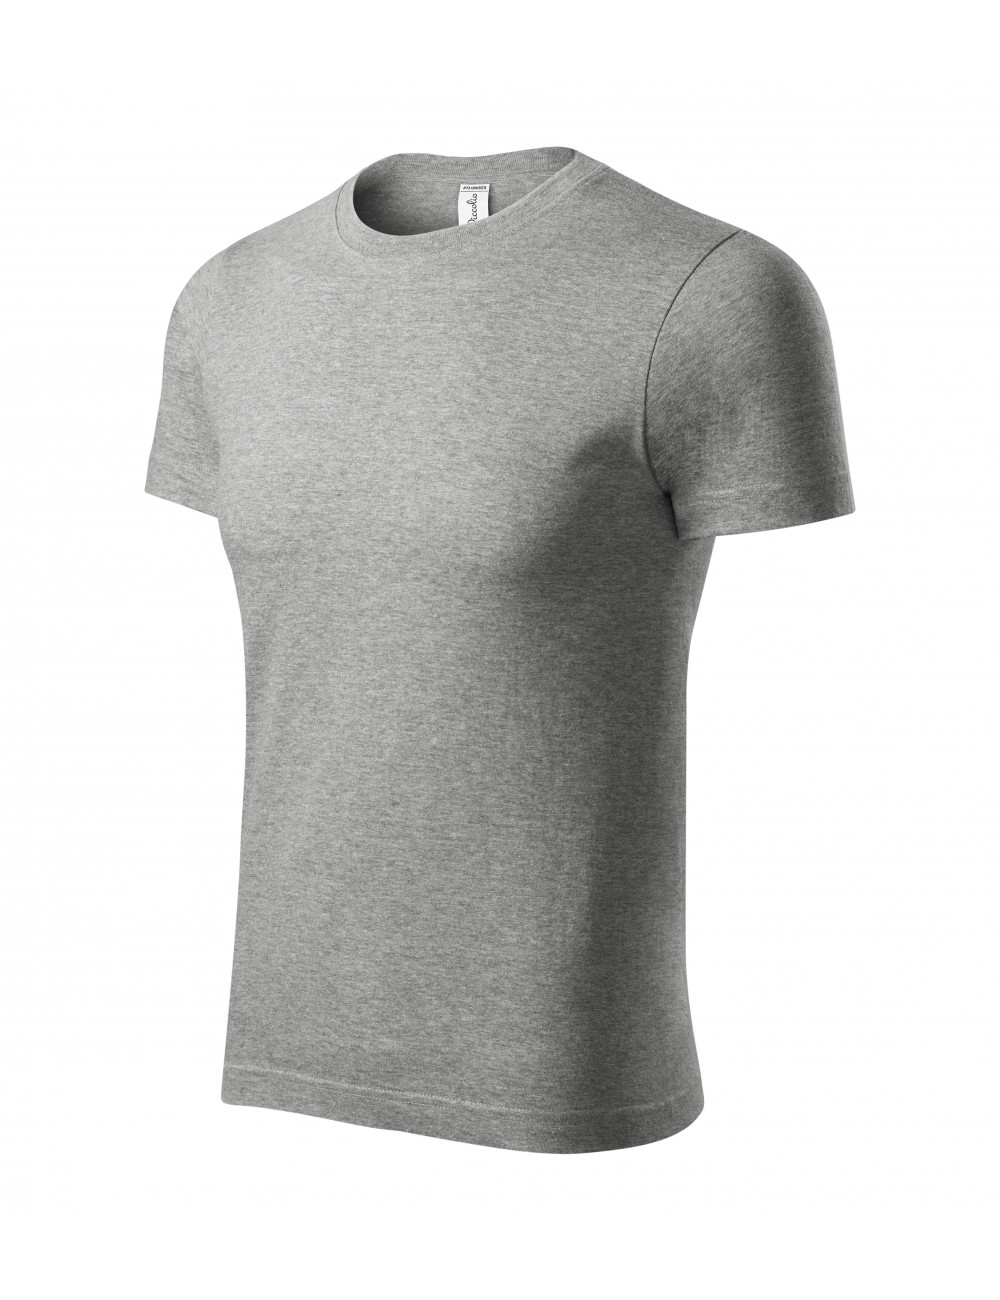 Unisex T-Shirt Farbe P73 Dunkelgrau Melange Adler Piccolio